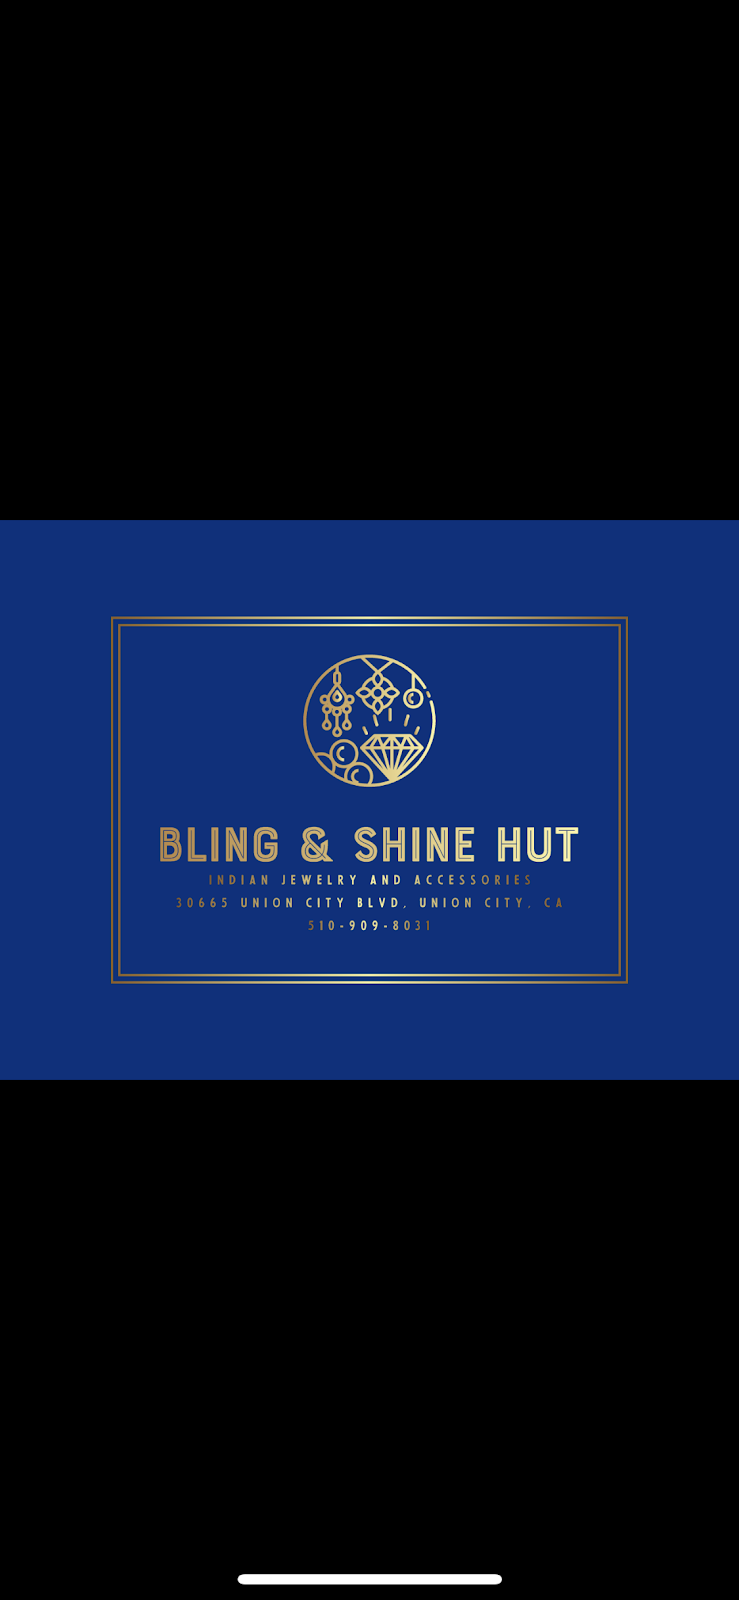 Bling & Shine Hut | 30665 Union City Blvd, Union City, CA 94587 | Phone: (510) 294-8401